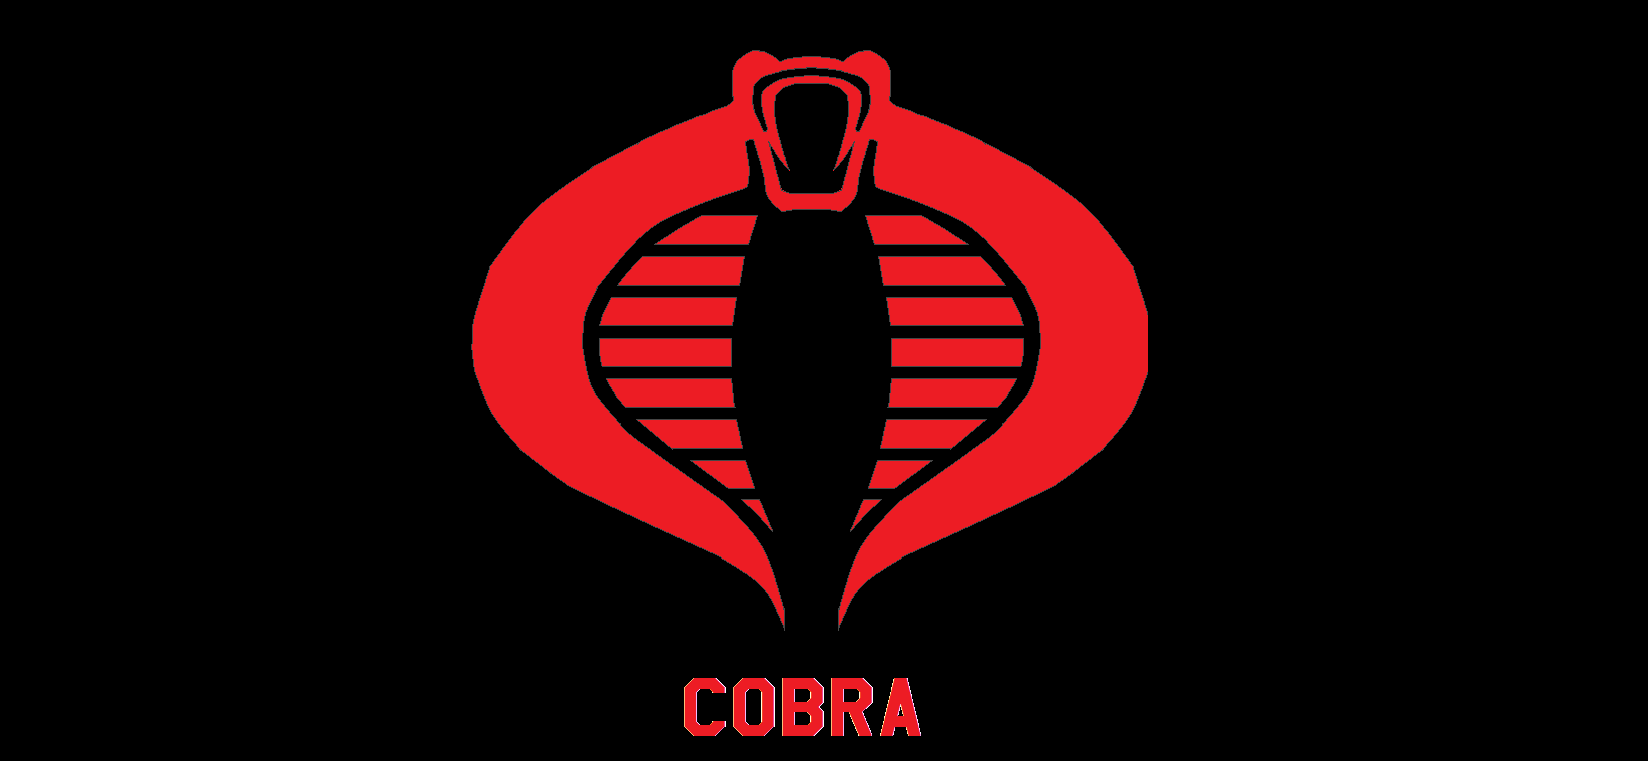 Cobra Logo Wallpaper By Bagera3005